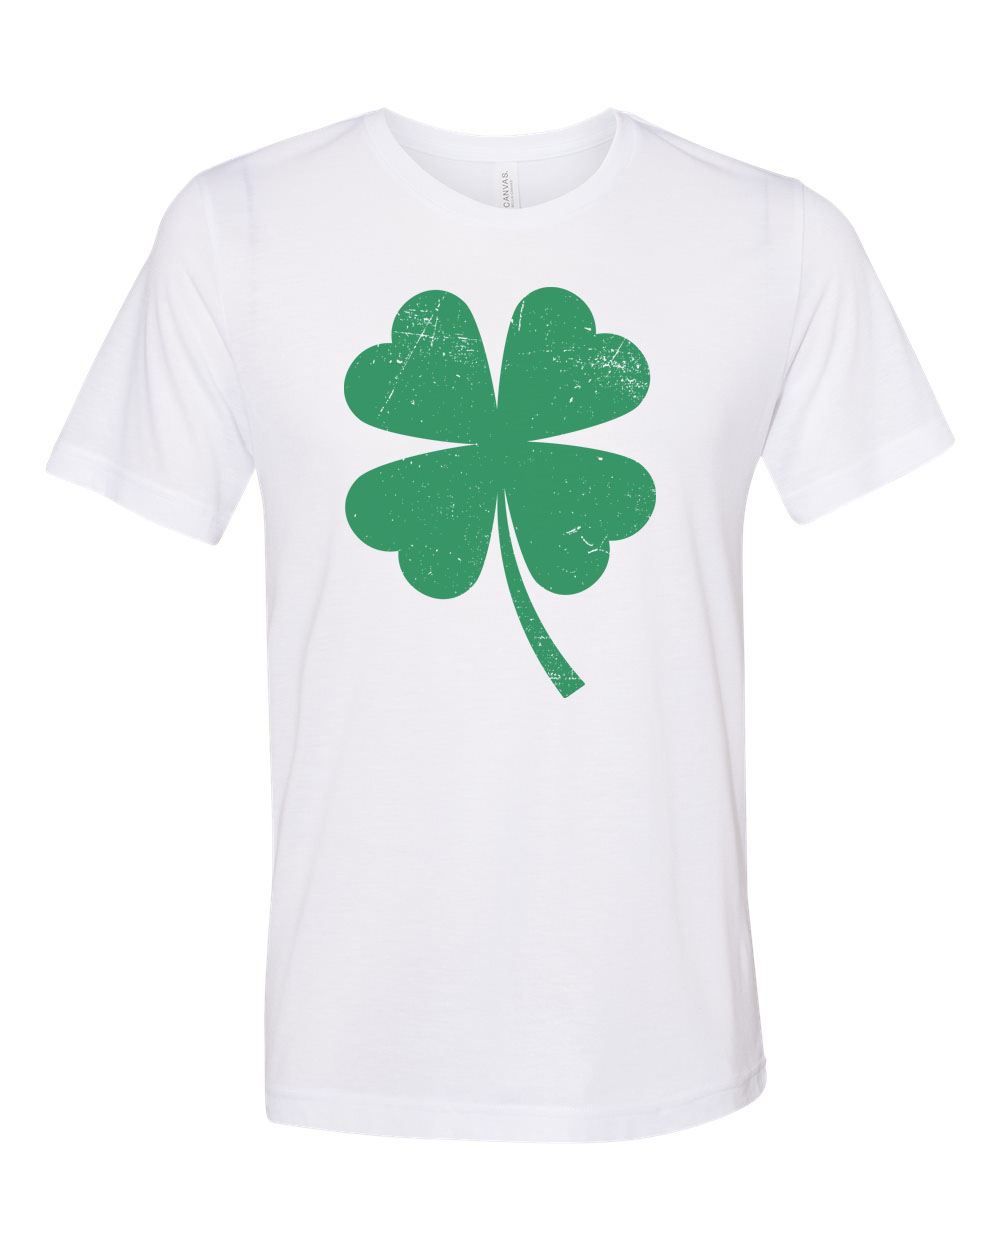 St. Patricks Day Shirt, Shamrock Shirt, Four Leaf Clover, Unisex Fit, Distressed Clover, Clover Shirt, 4 Leaf Clover, Shamrock, St Patricks, White, MEDIUM - image 1 of 1